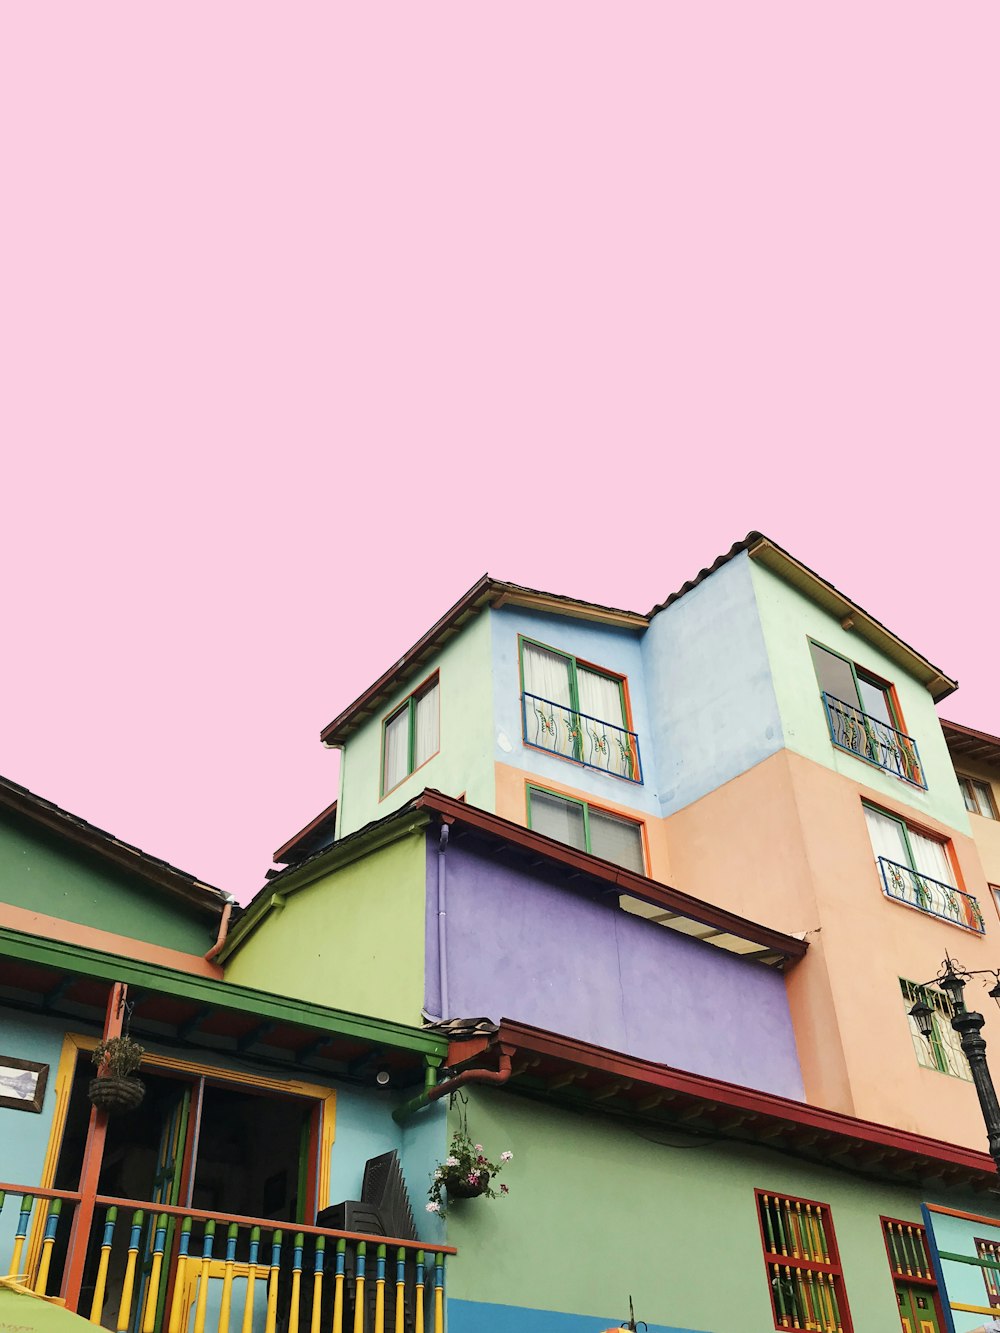 casa multicolorida sob o céu rosa